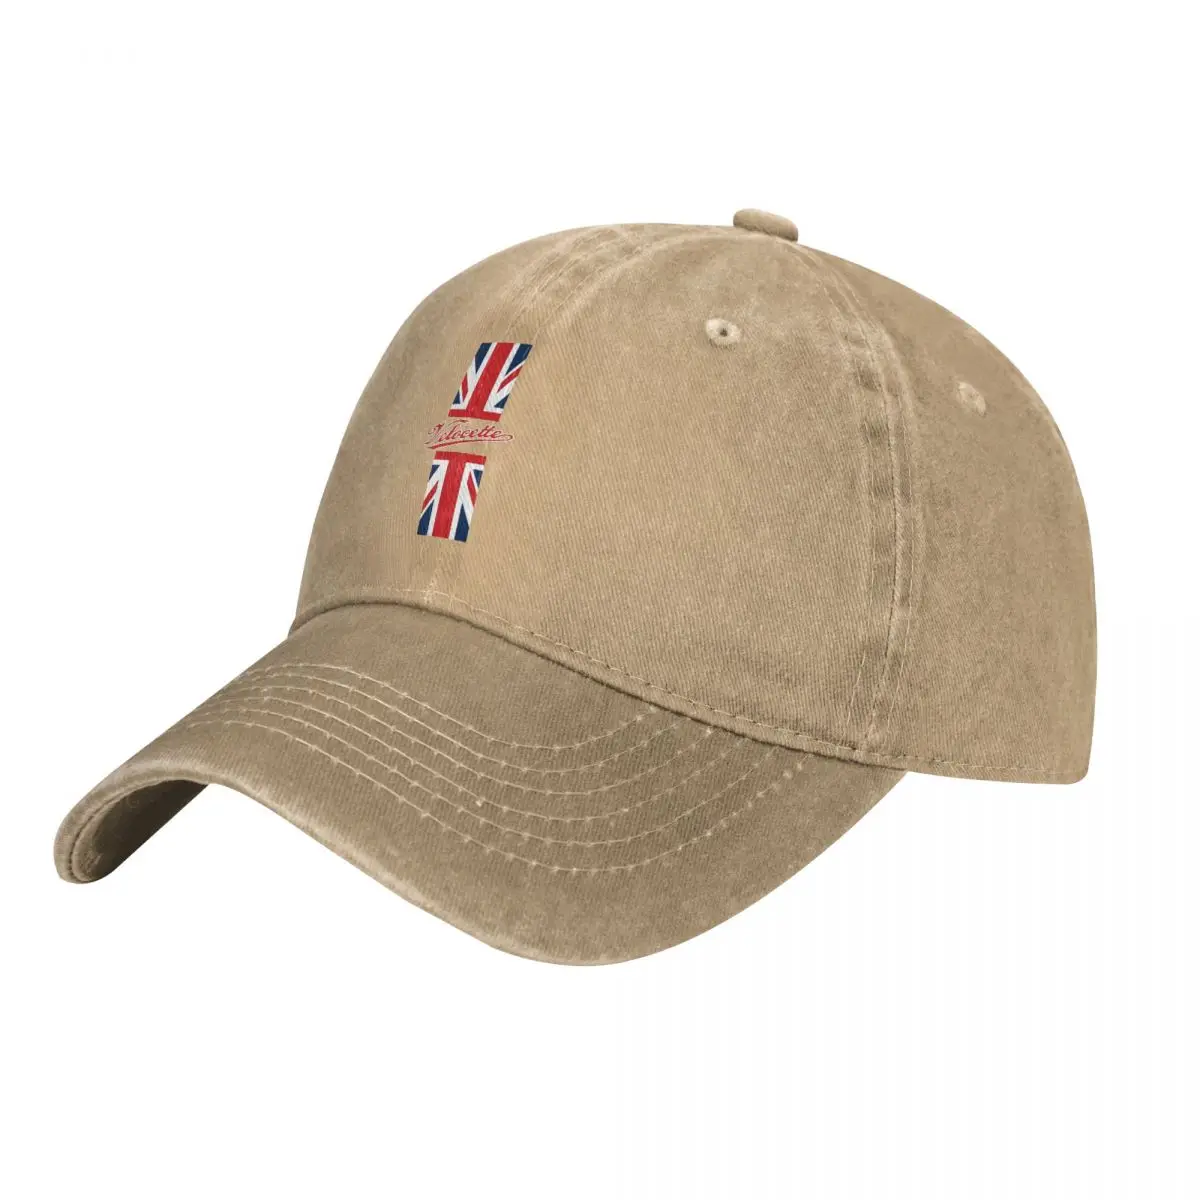 

Velocette Motorcycle Uk Baseball Caps Men Women Distressed Denim Snapback Hat Vintage England Outdoor Adjustable Hats Cap